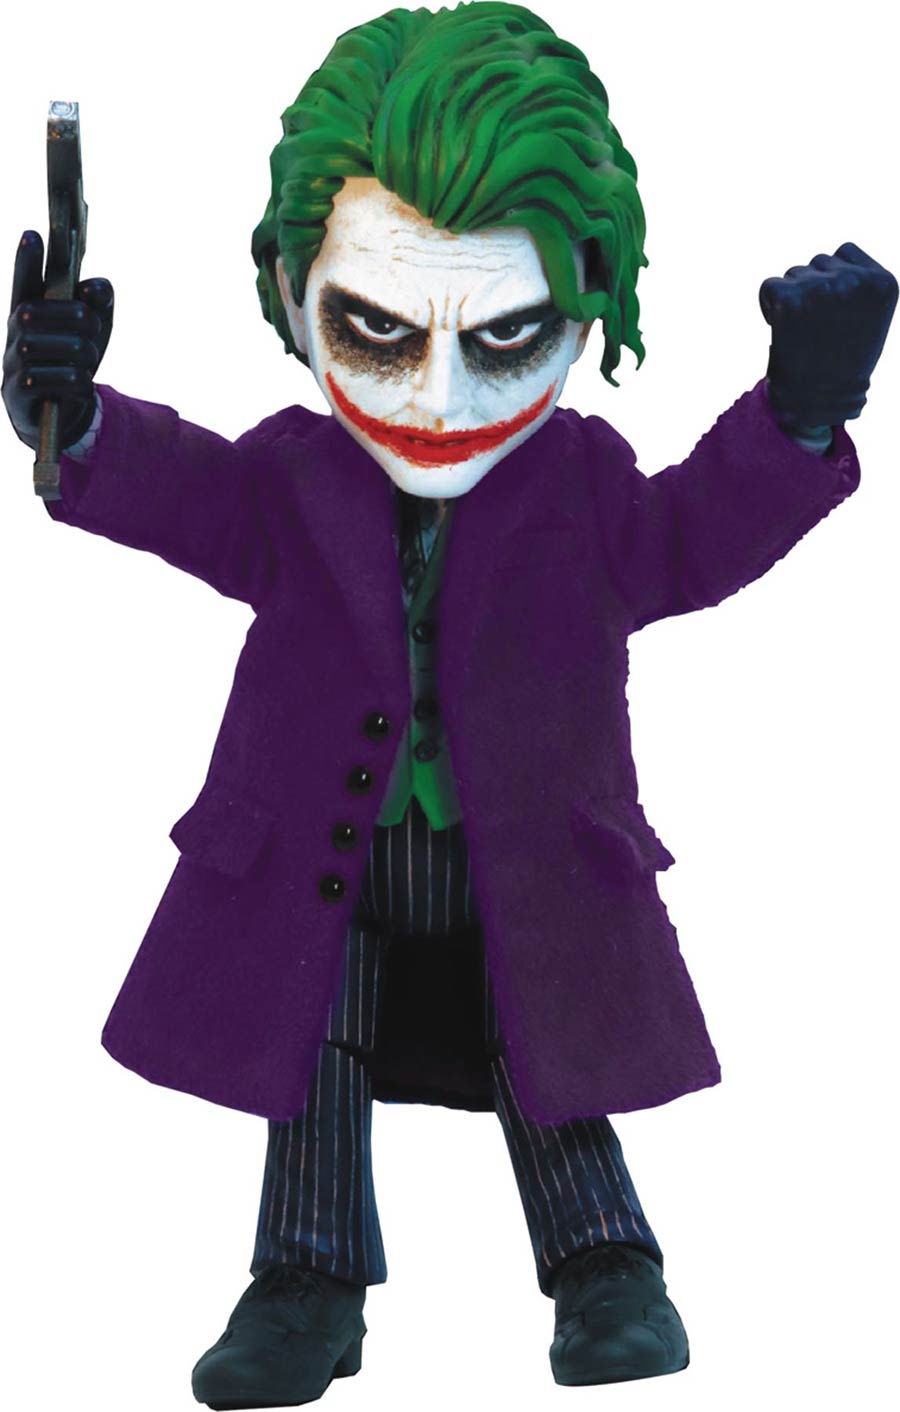 Hybrid Metal Figuration #046 Batman The Dark Knight Joker Action Figure